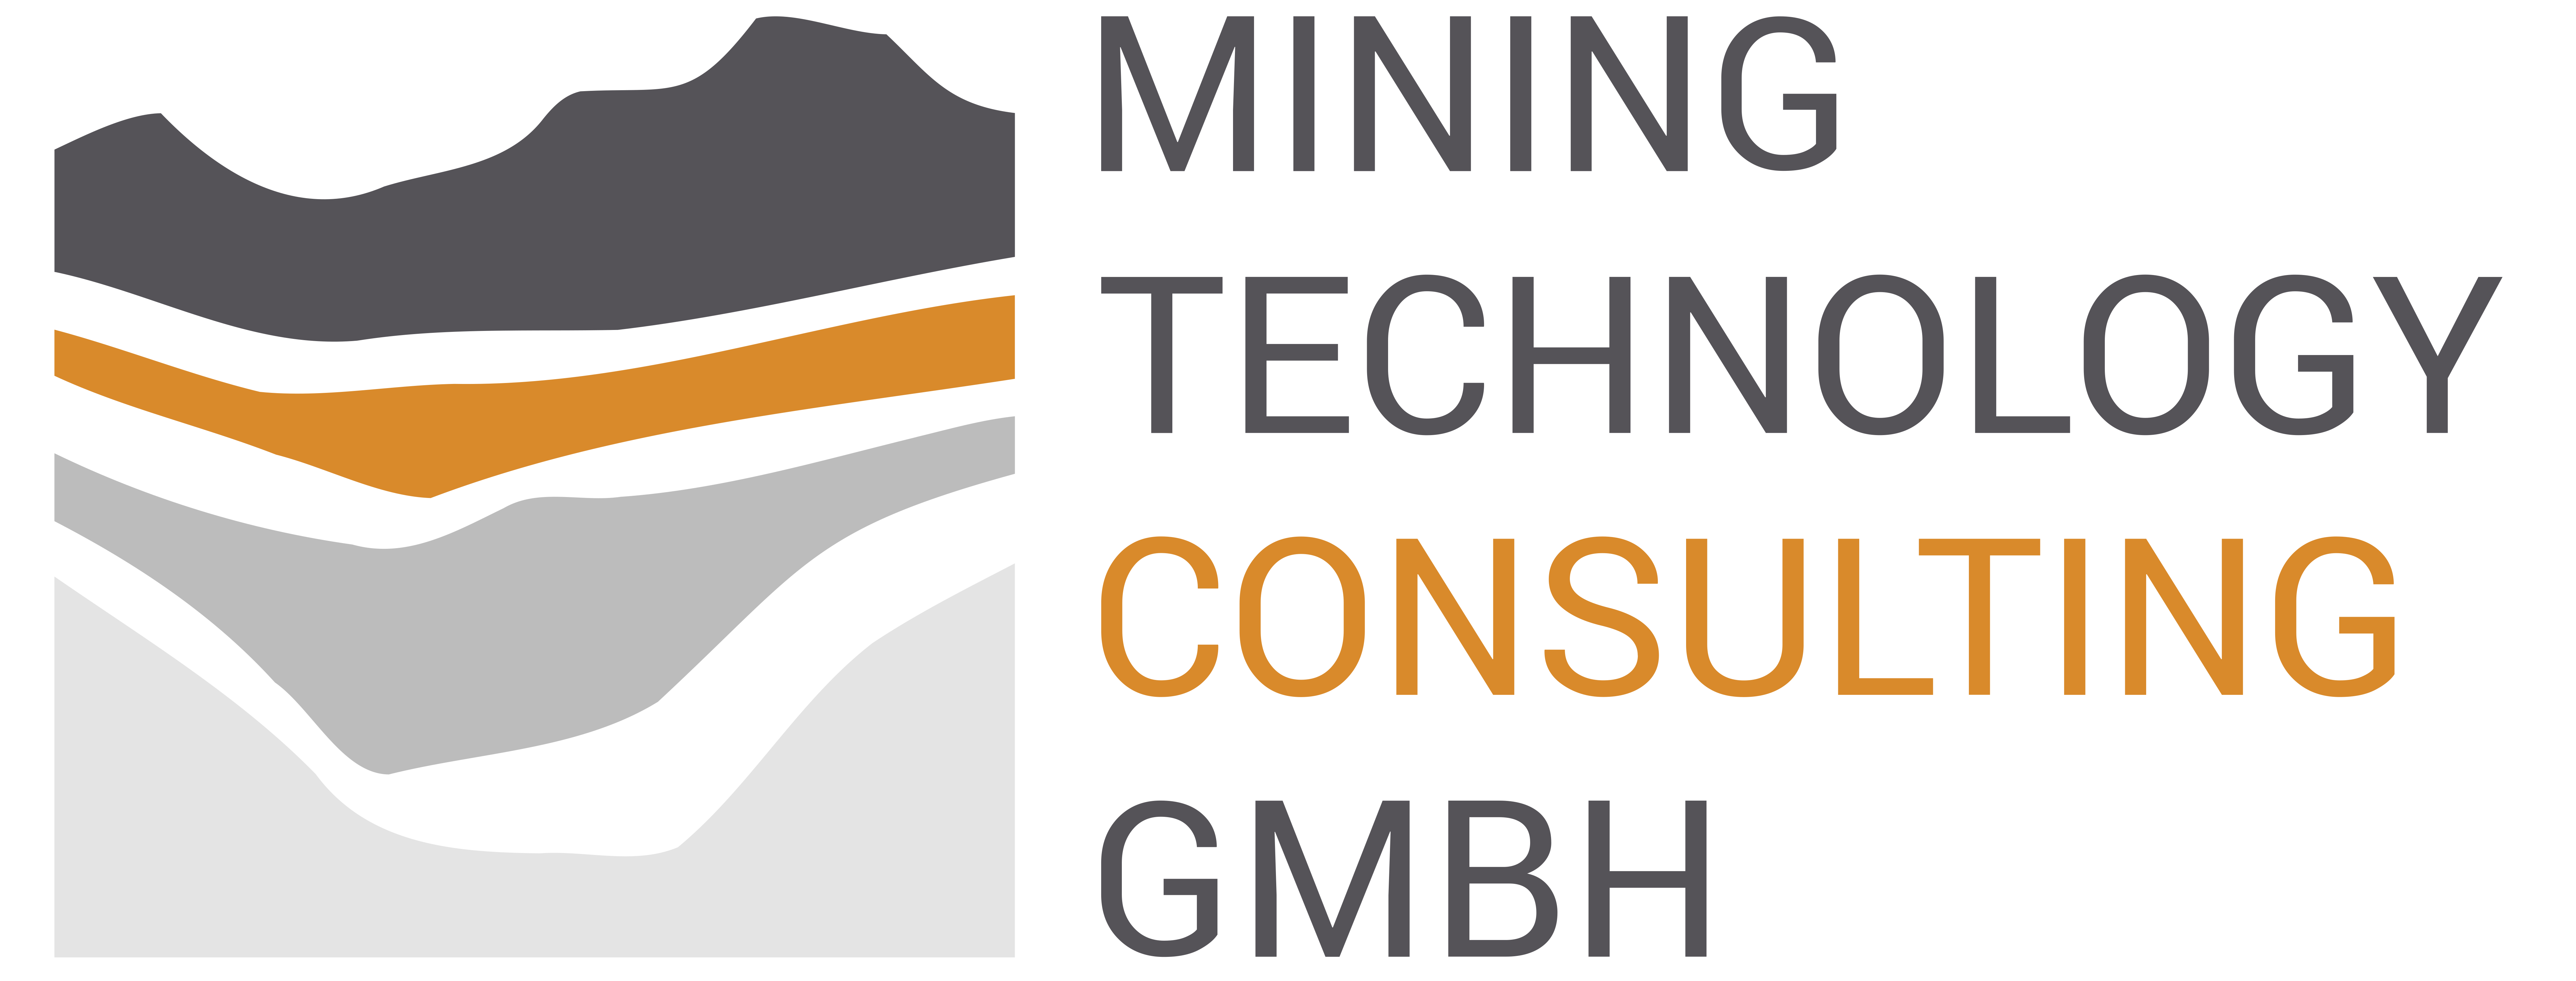 MTC - Mining Technology Consulting GmbH